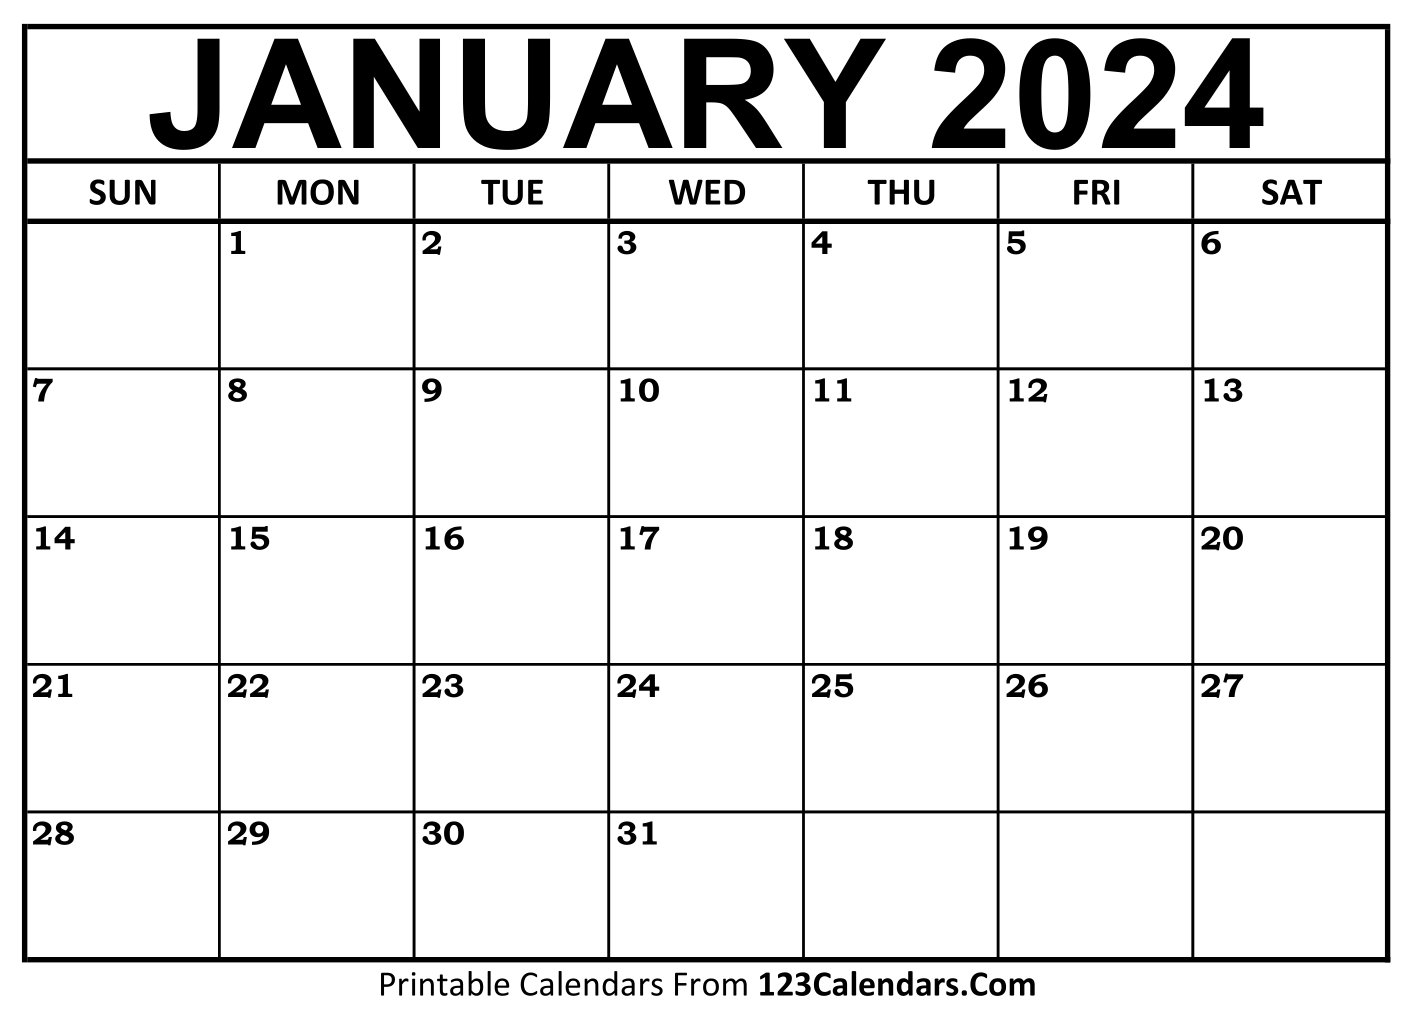 Printable January 2024 Calendar Templates - 123Calendars for Calendar 2024 January Printable Free